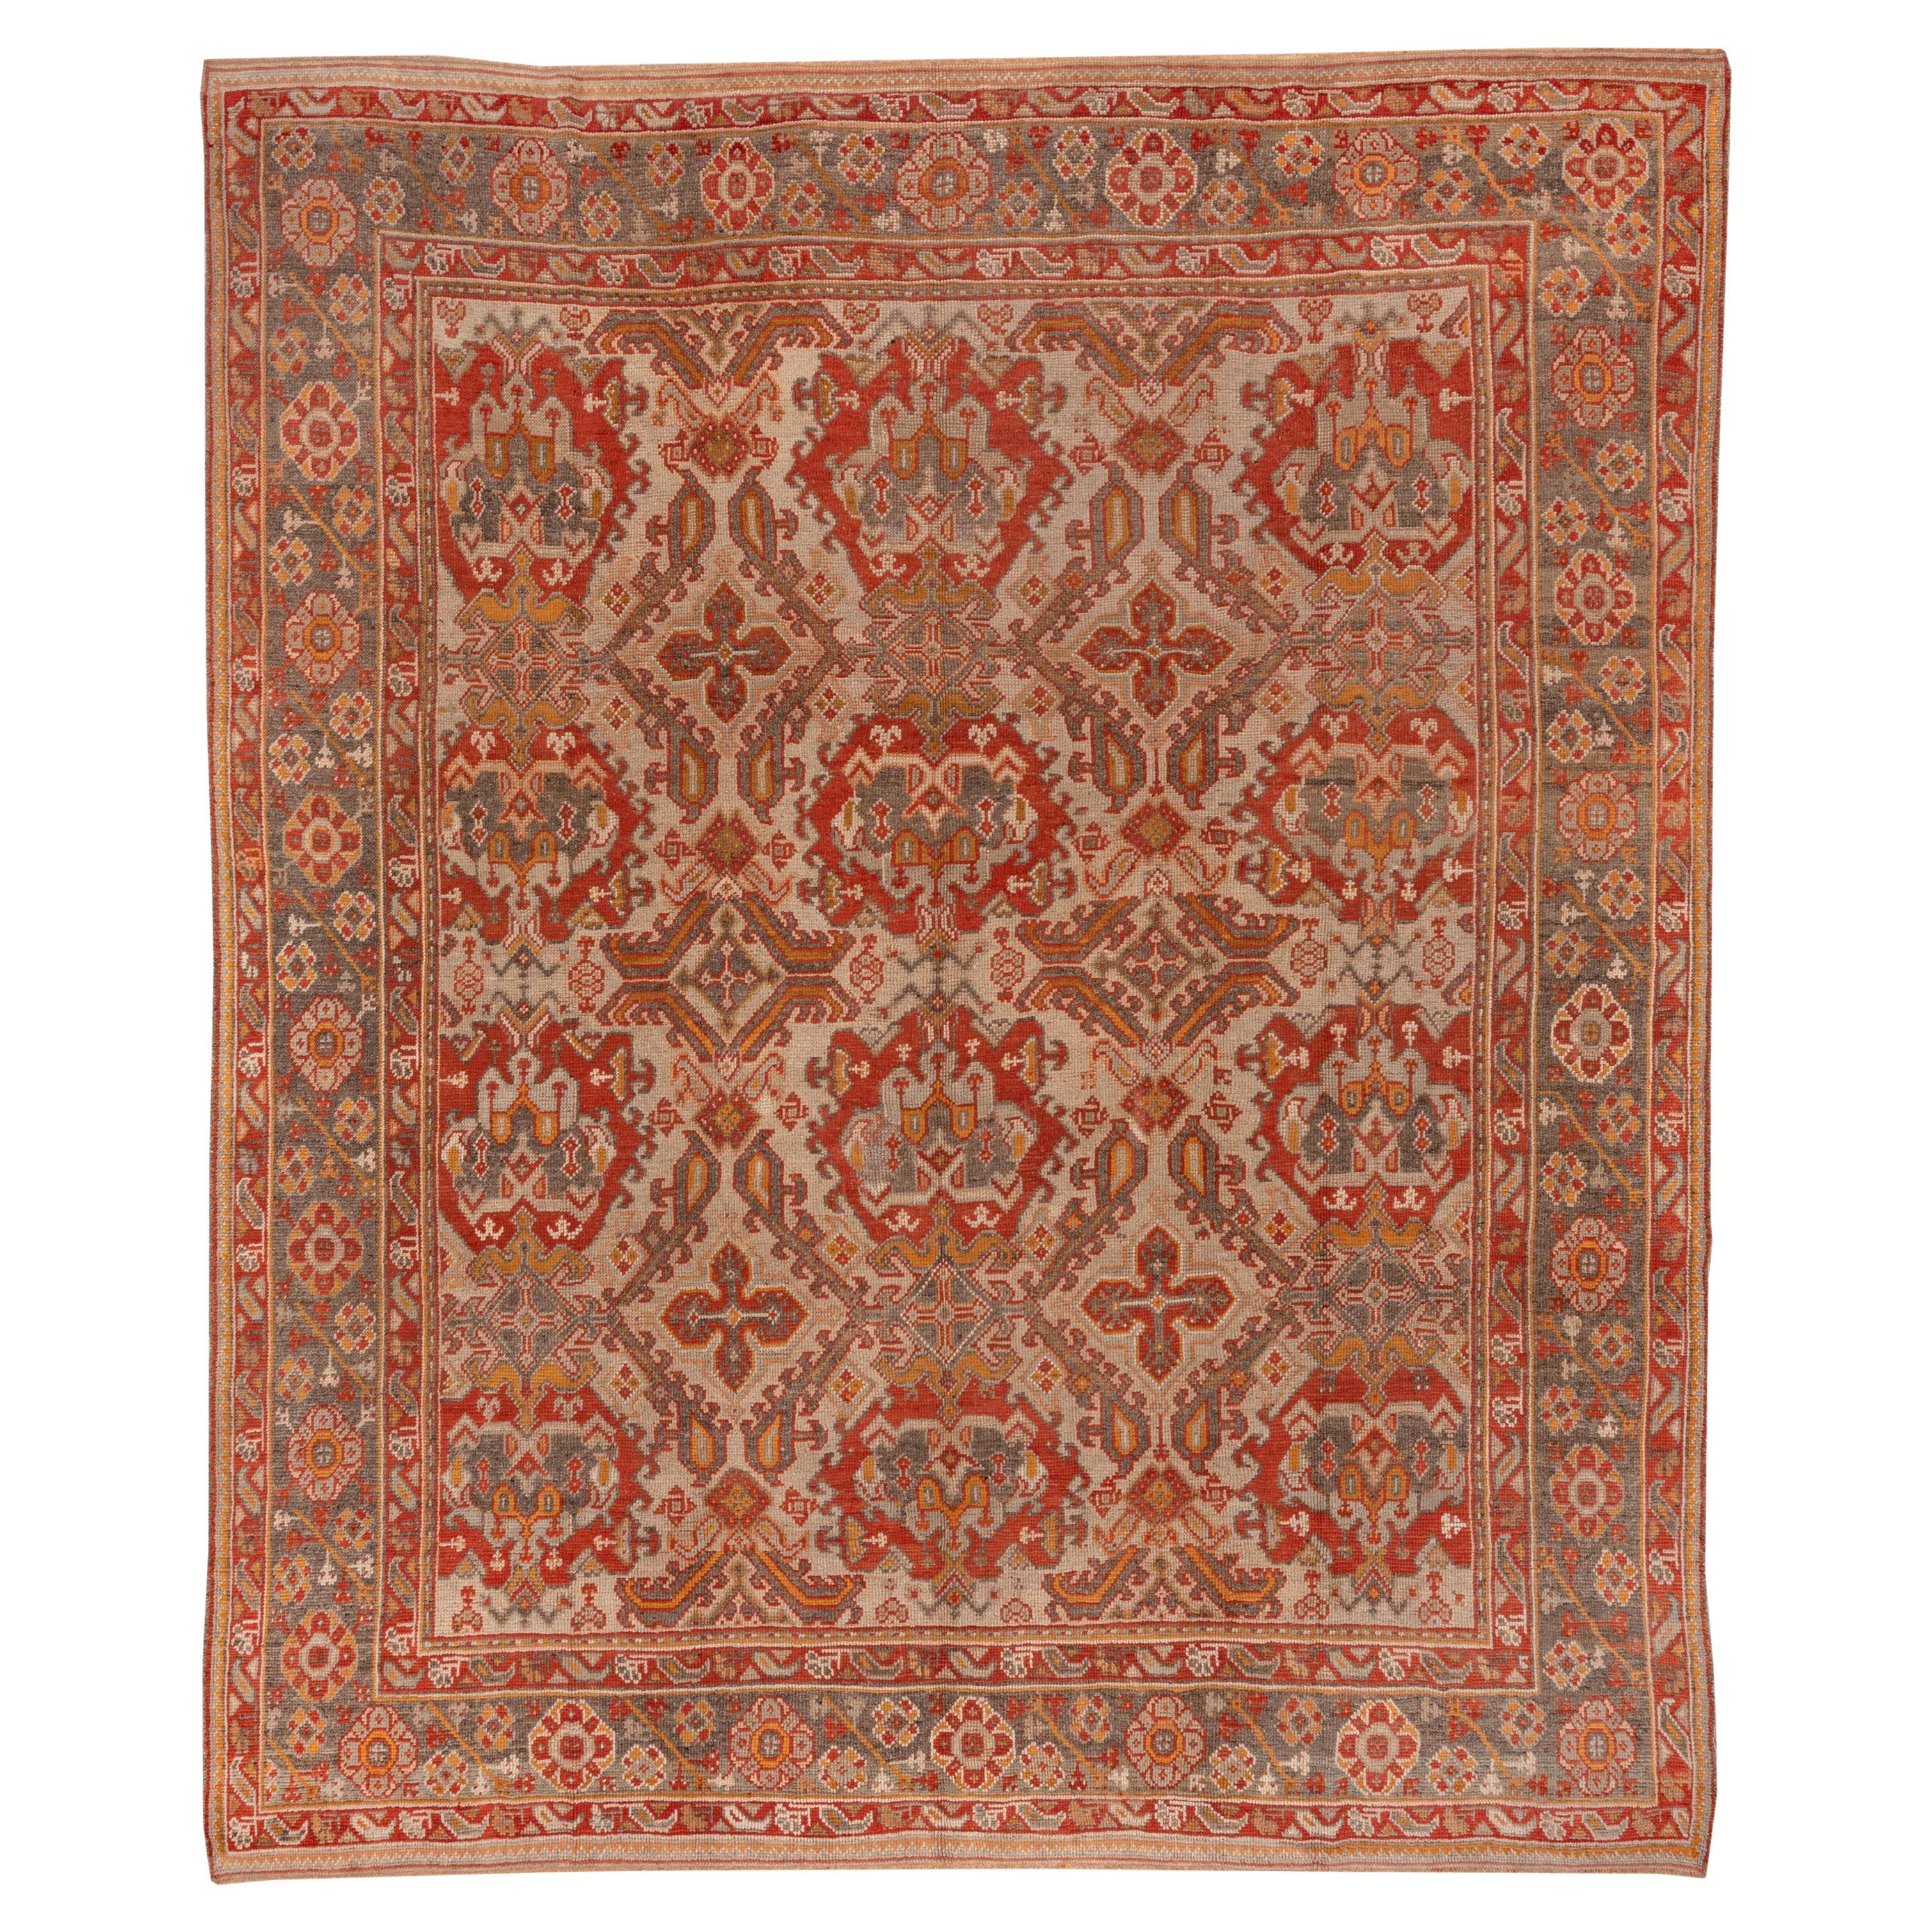 Antique Colorful Turkish Oushak Carpet, Allover Field, Colorful Palette For Sale